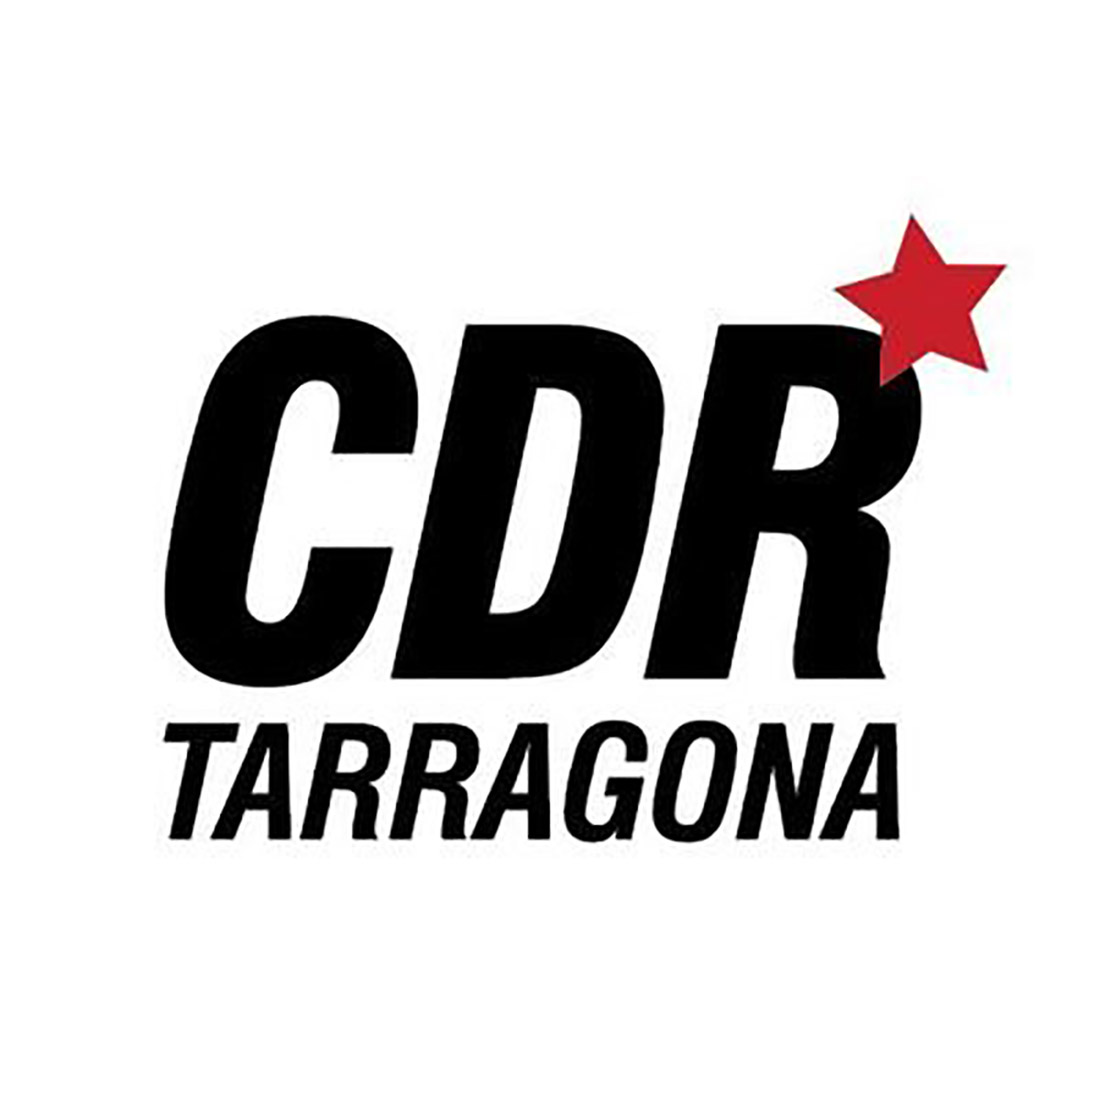 El logo del CDR Tarragona